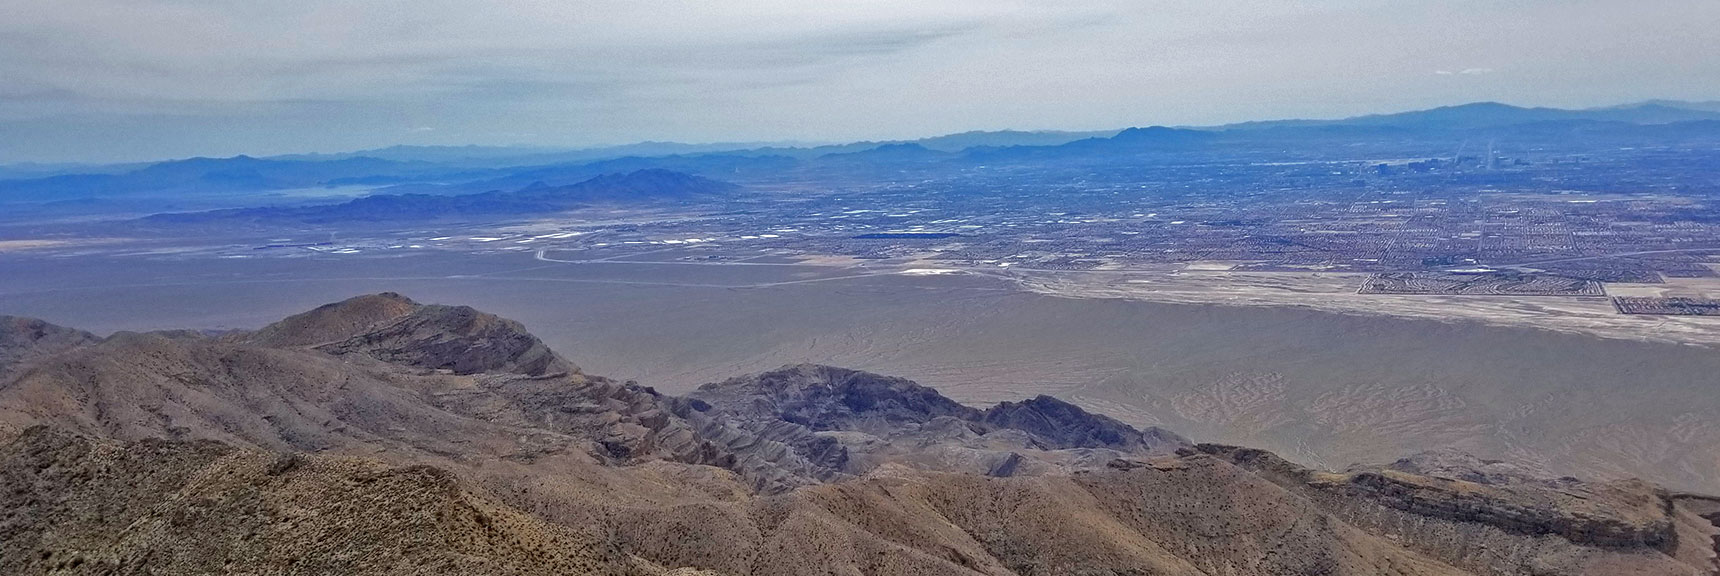 View of Eastern Las Vegas and Lake Mead from Near the Eastern Summit of Gass Peak | Gass Peak Eastern Summit Ultra-marathon Adventure, Nevada